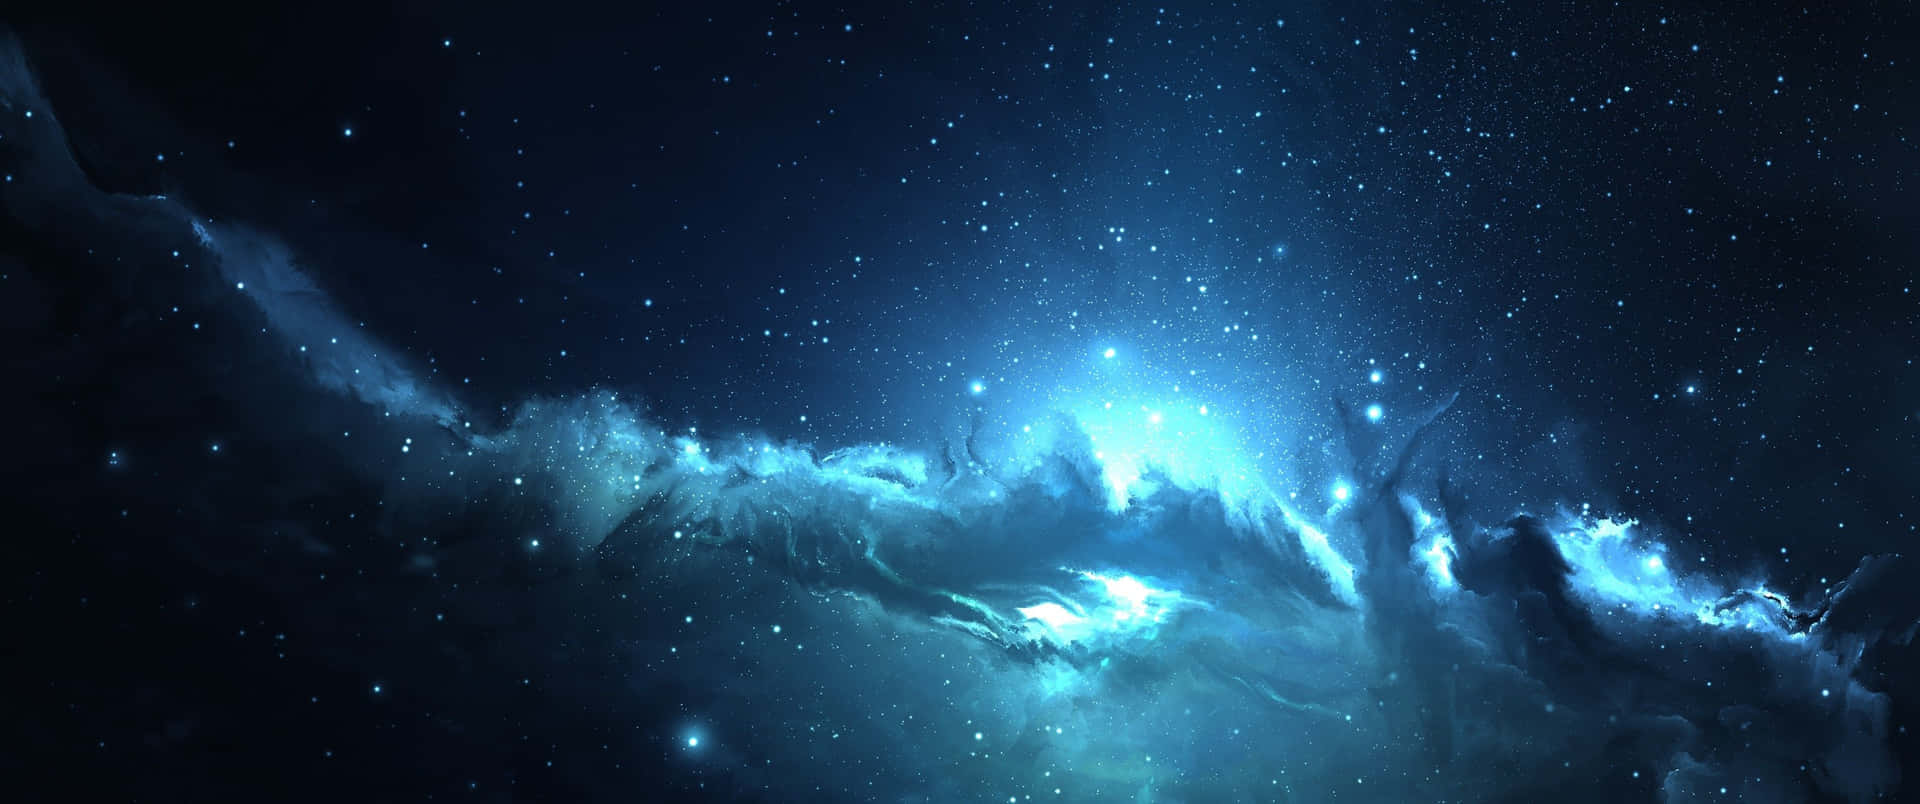 3440x1440 Space Blue Atlantis Nebula Wallpaper